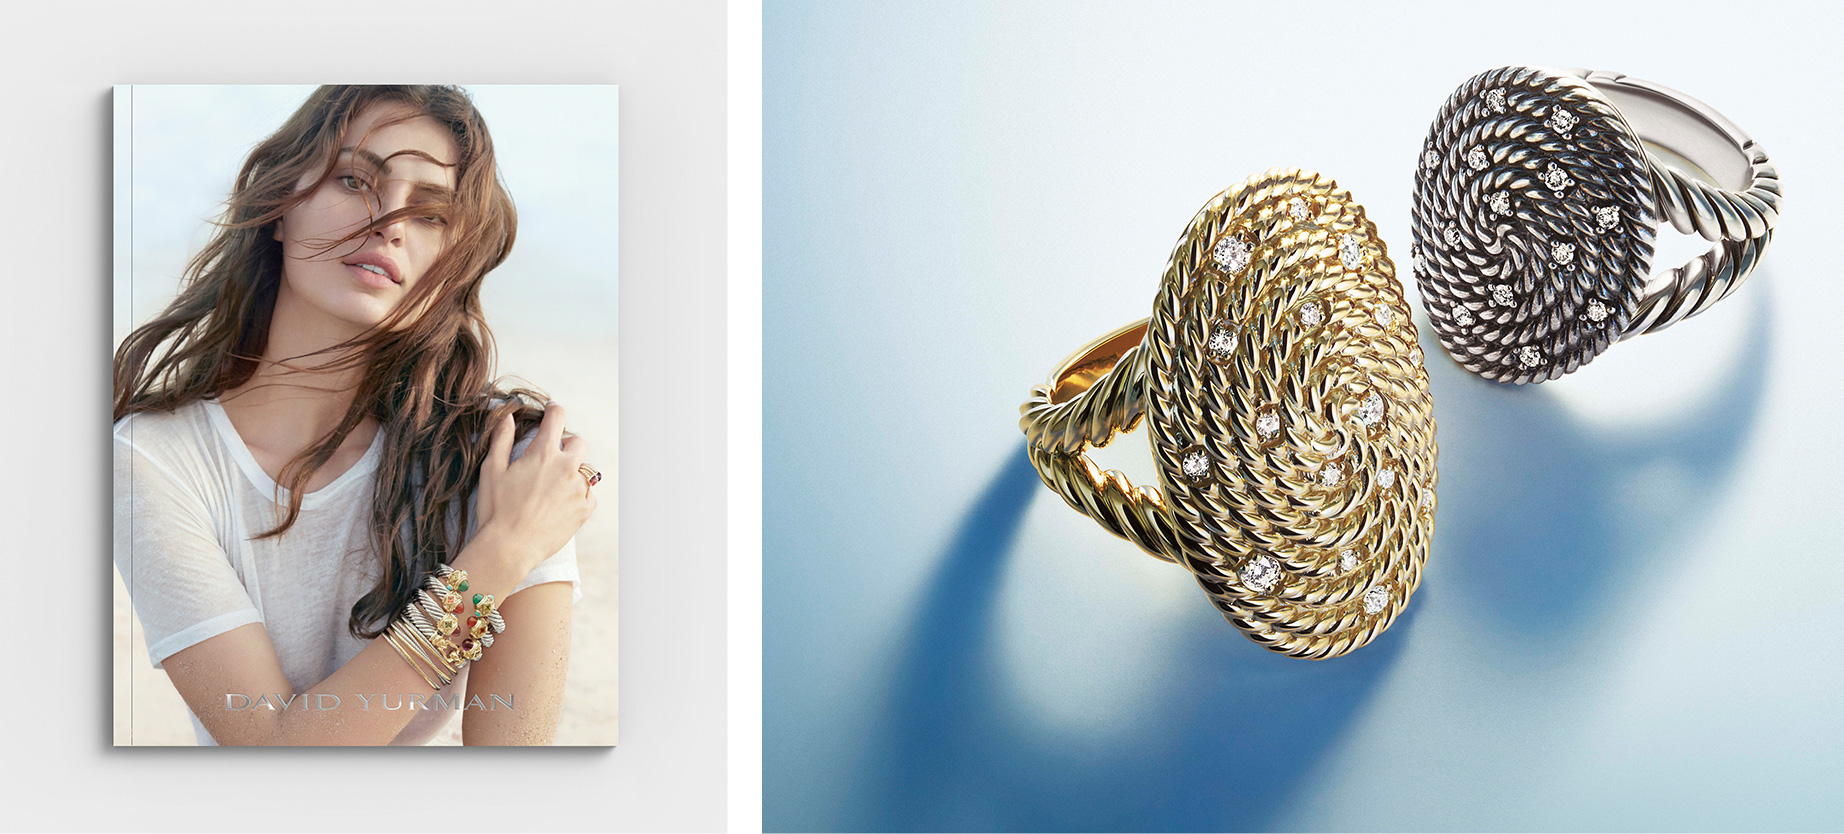 David Yurman Catalog Cover and Jewelry Image